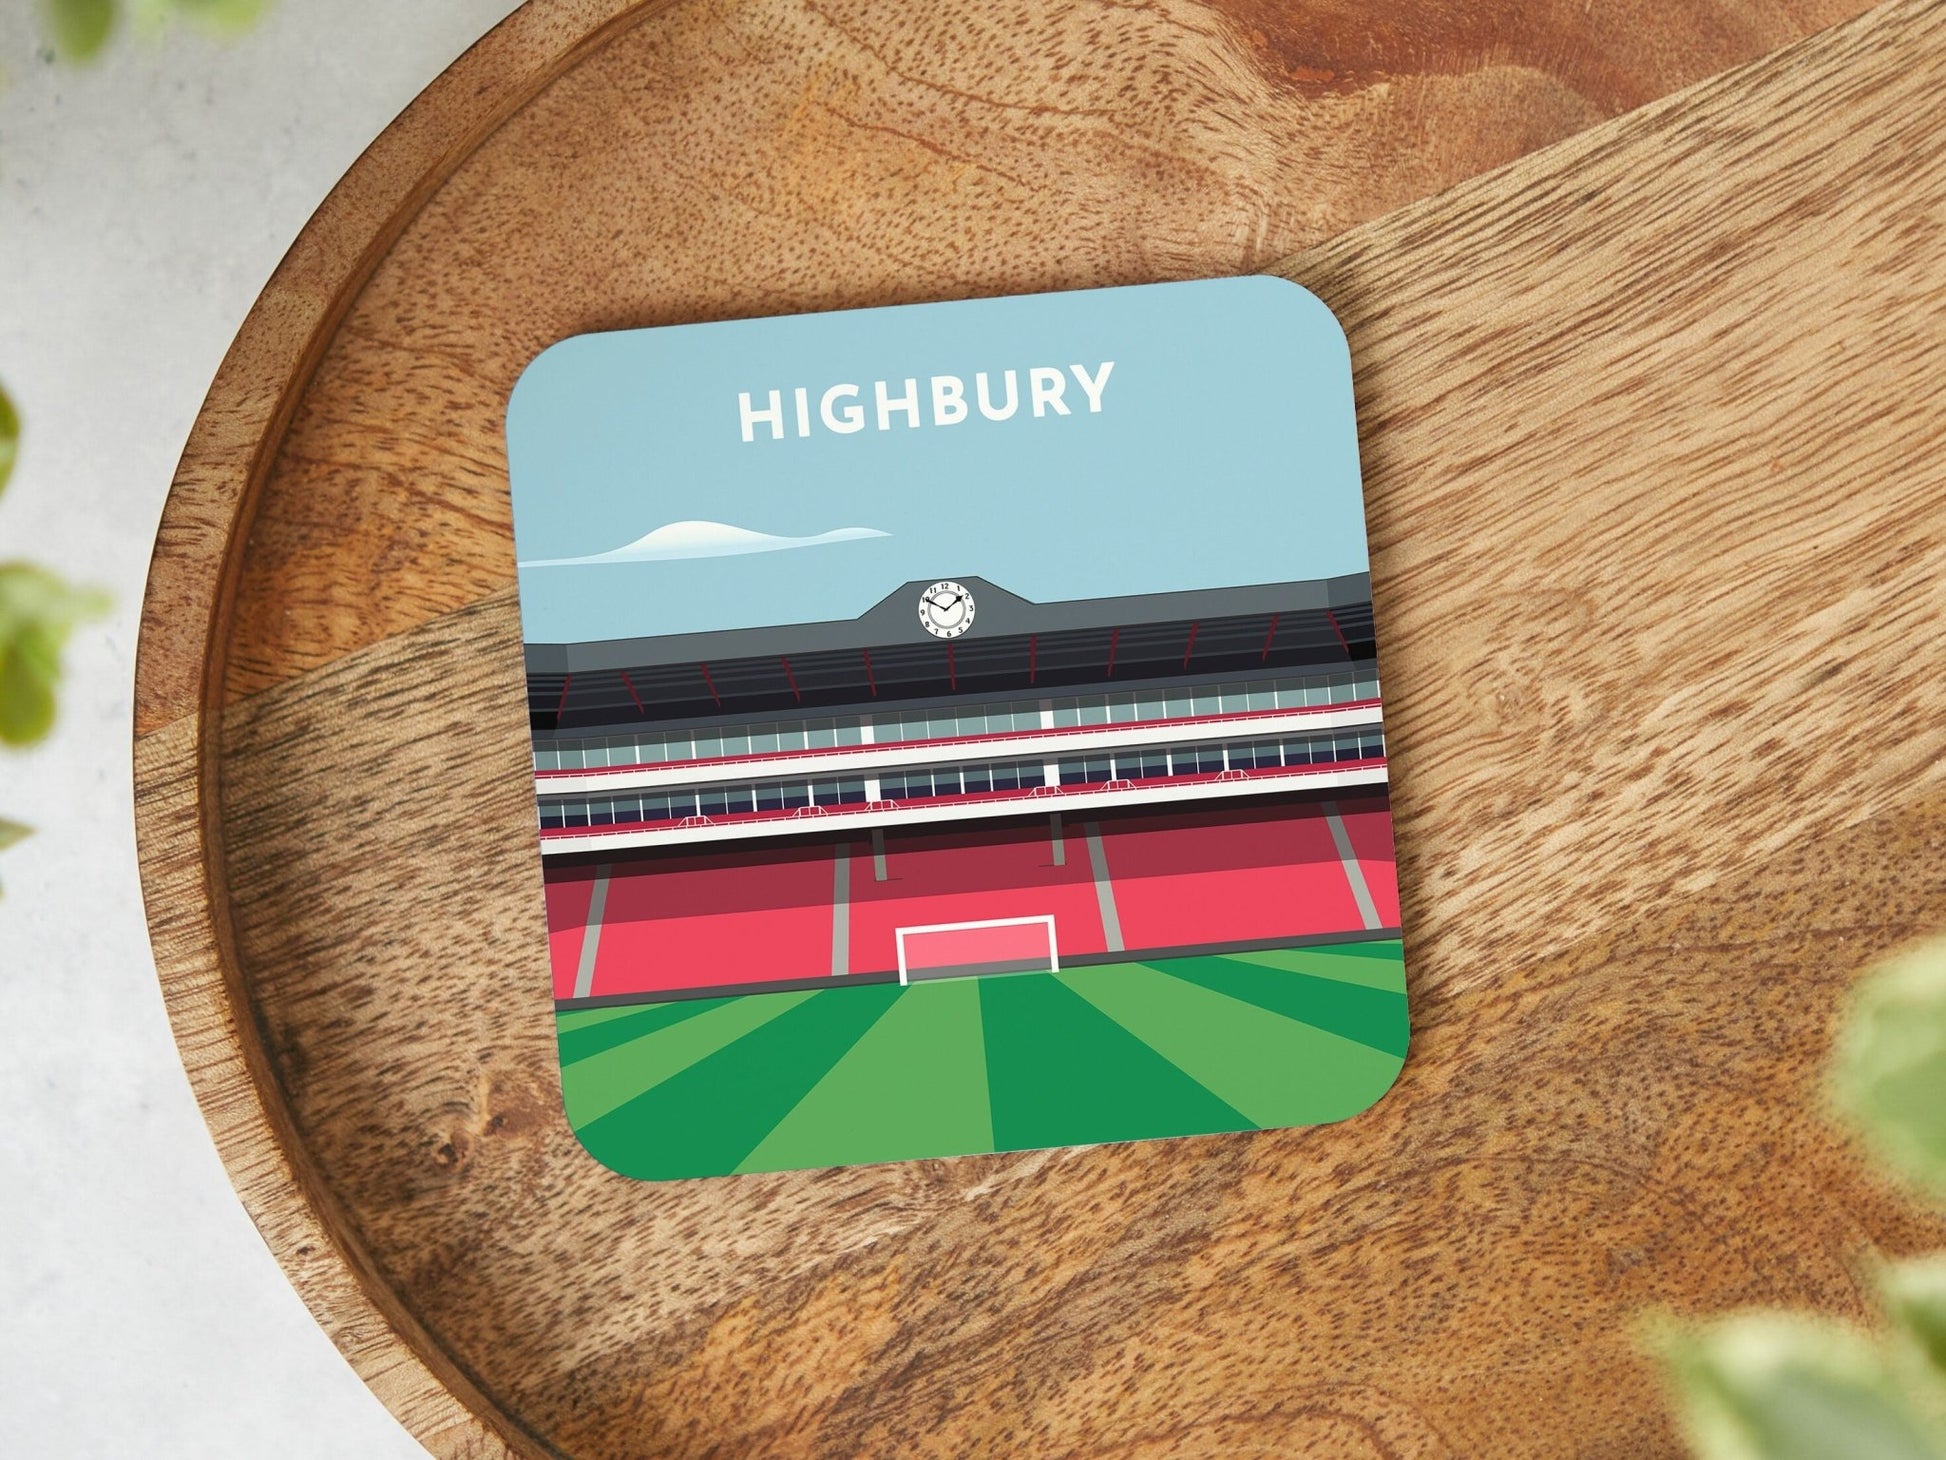 Arsenal Gifts Coaster - Highbury Stadium Drinks Coaster - Gift for Bar Pub - Last Minute Gifts - Turf Football Art